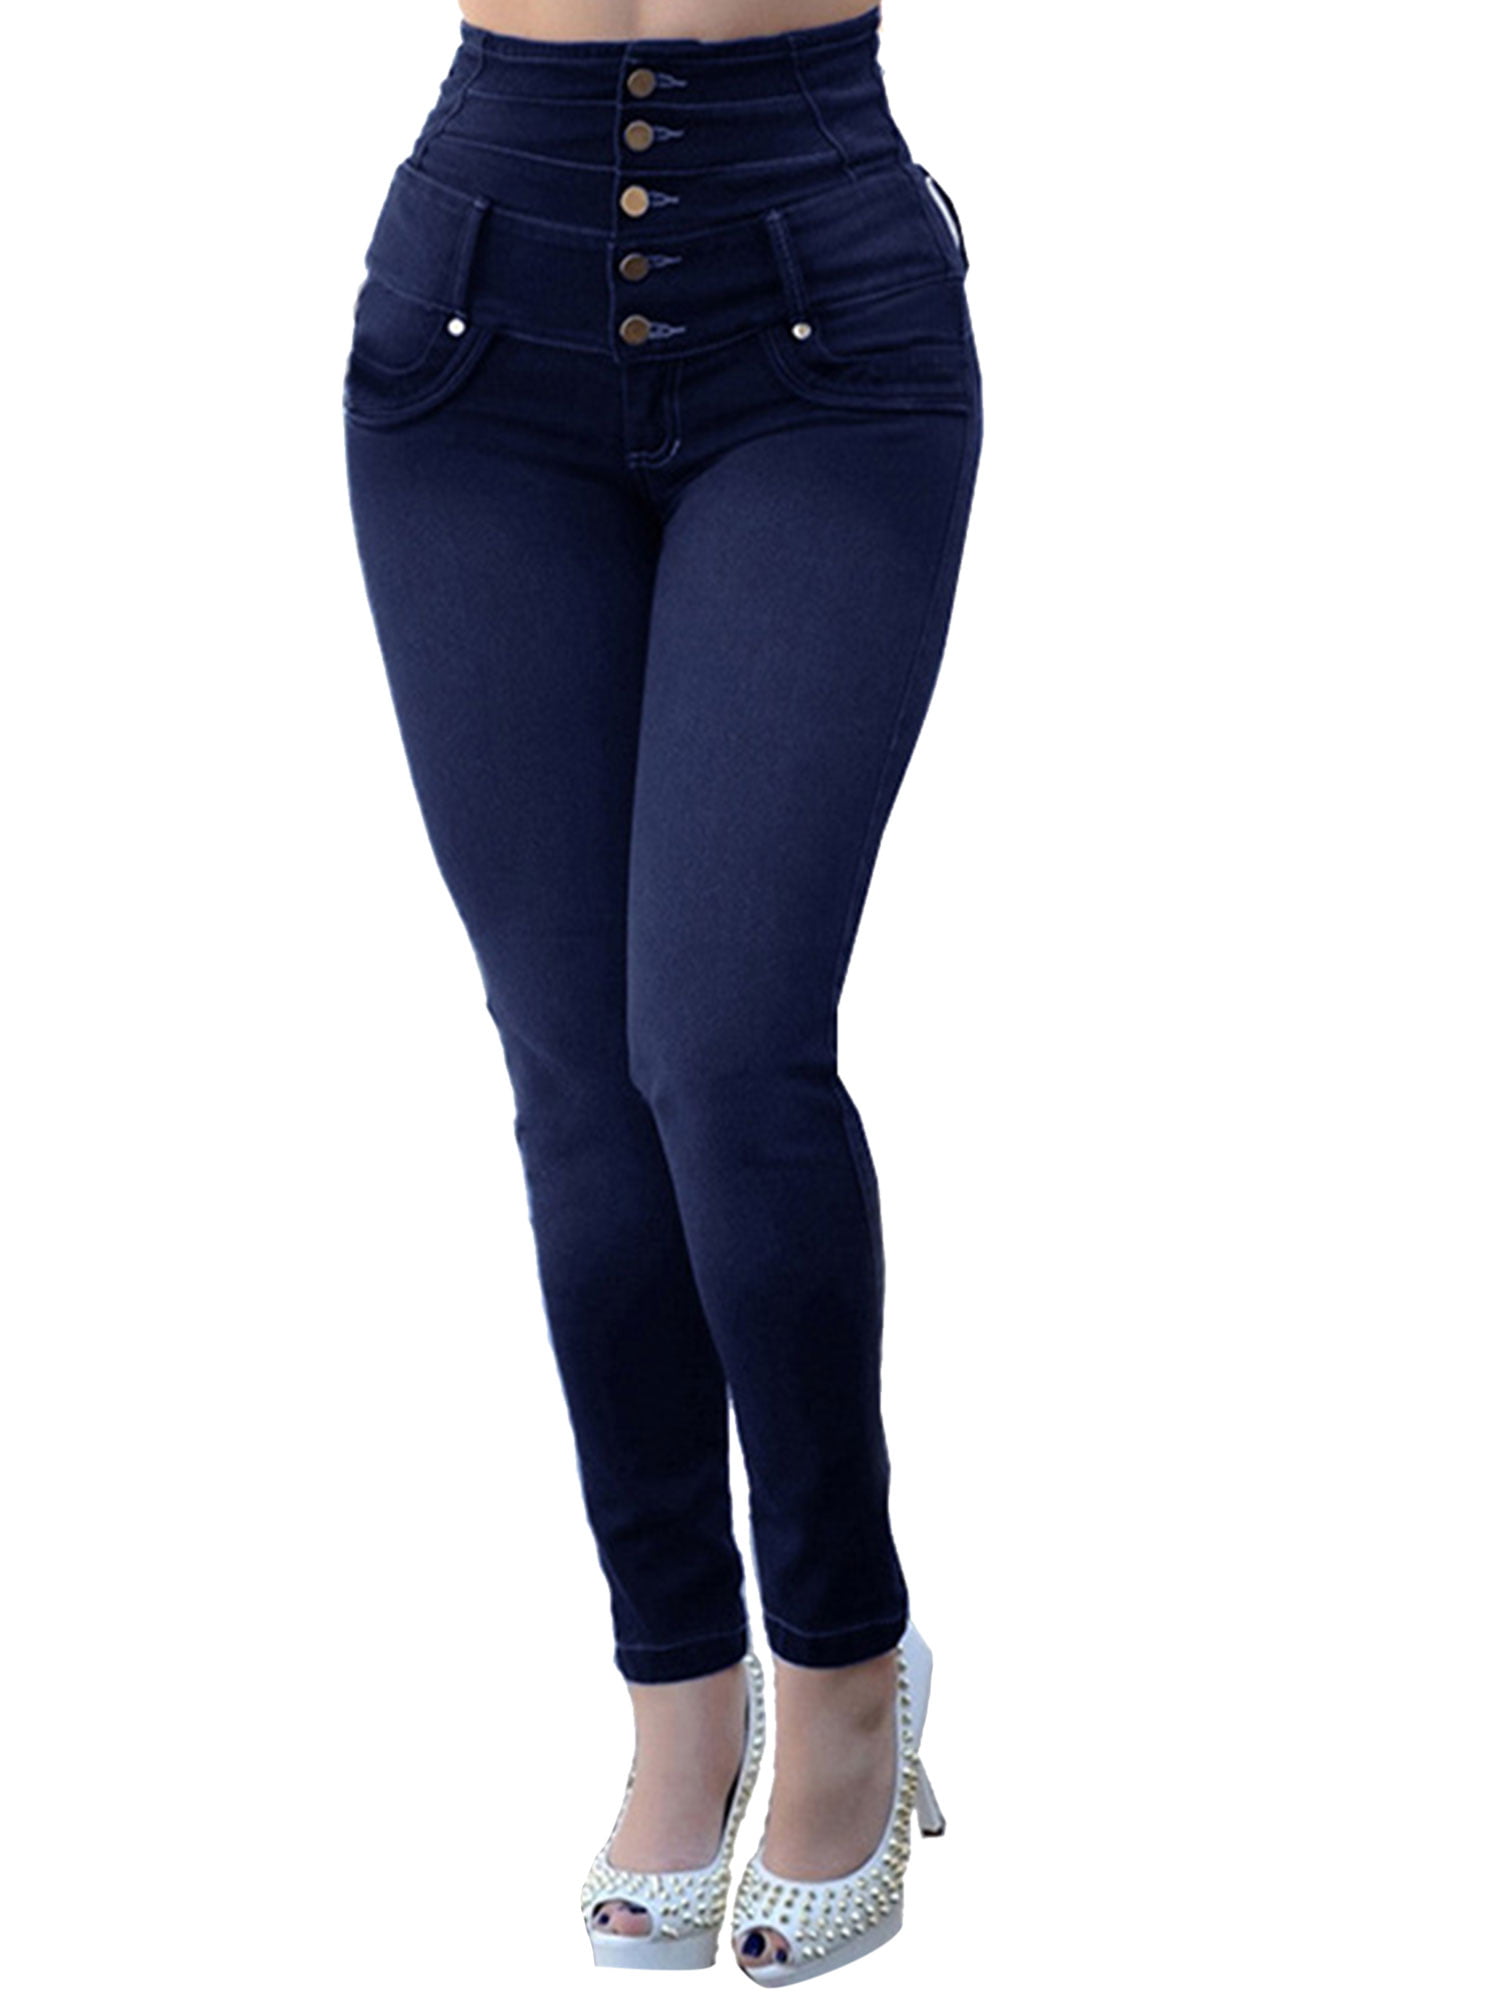 Women Jeans Pants Trousers Denim Buttoms Hole High Waist Skinny Pencil Long Slim